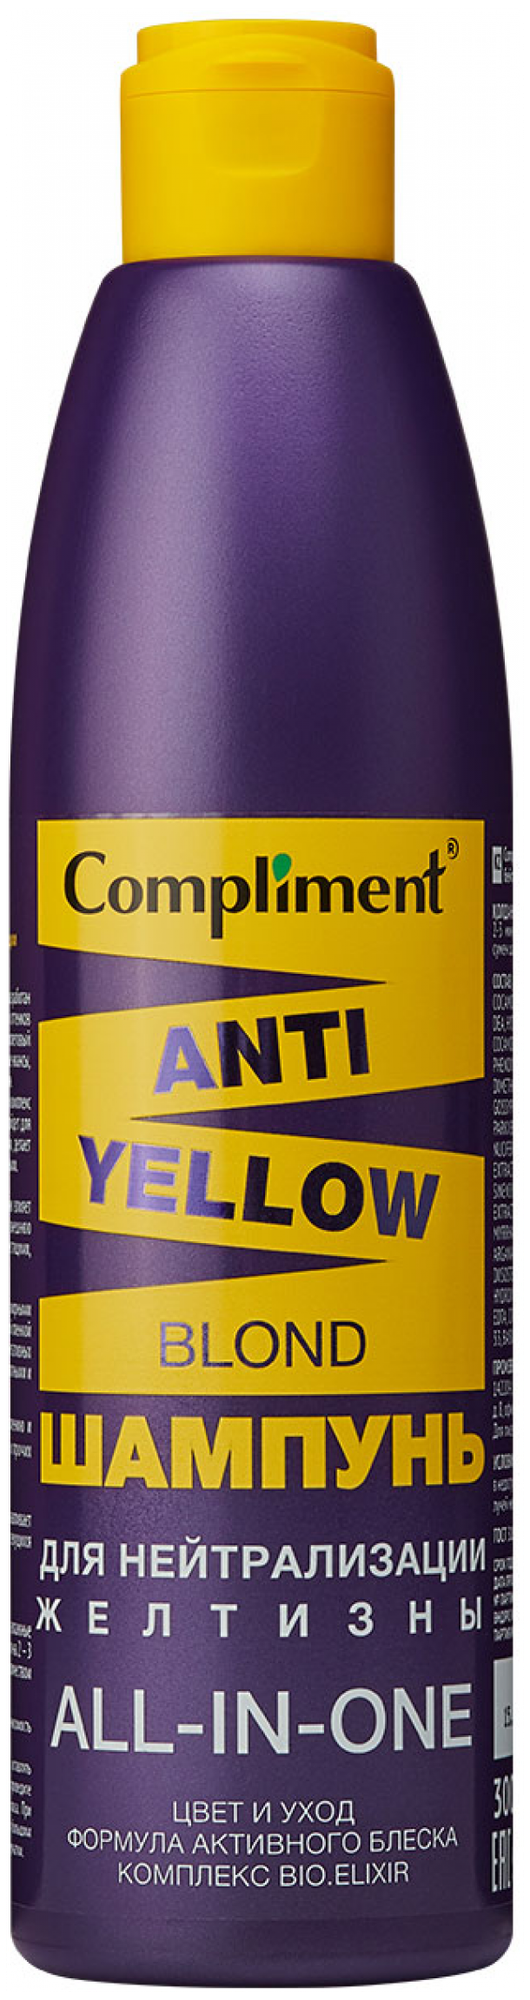 Anti-Yellow Blond Шампунь для нейтрализации желтизны, 300 мл